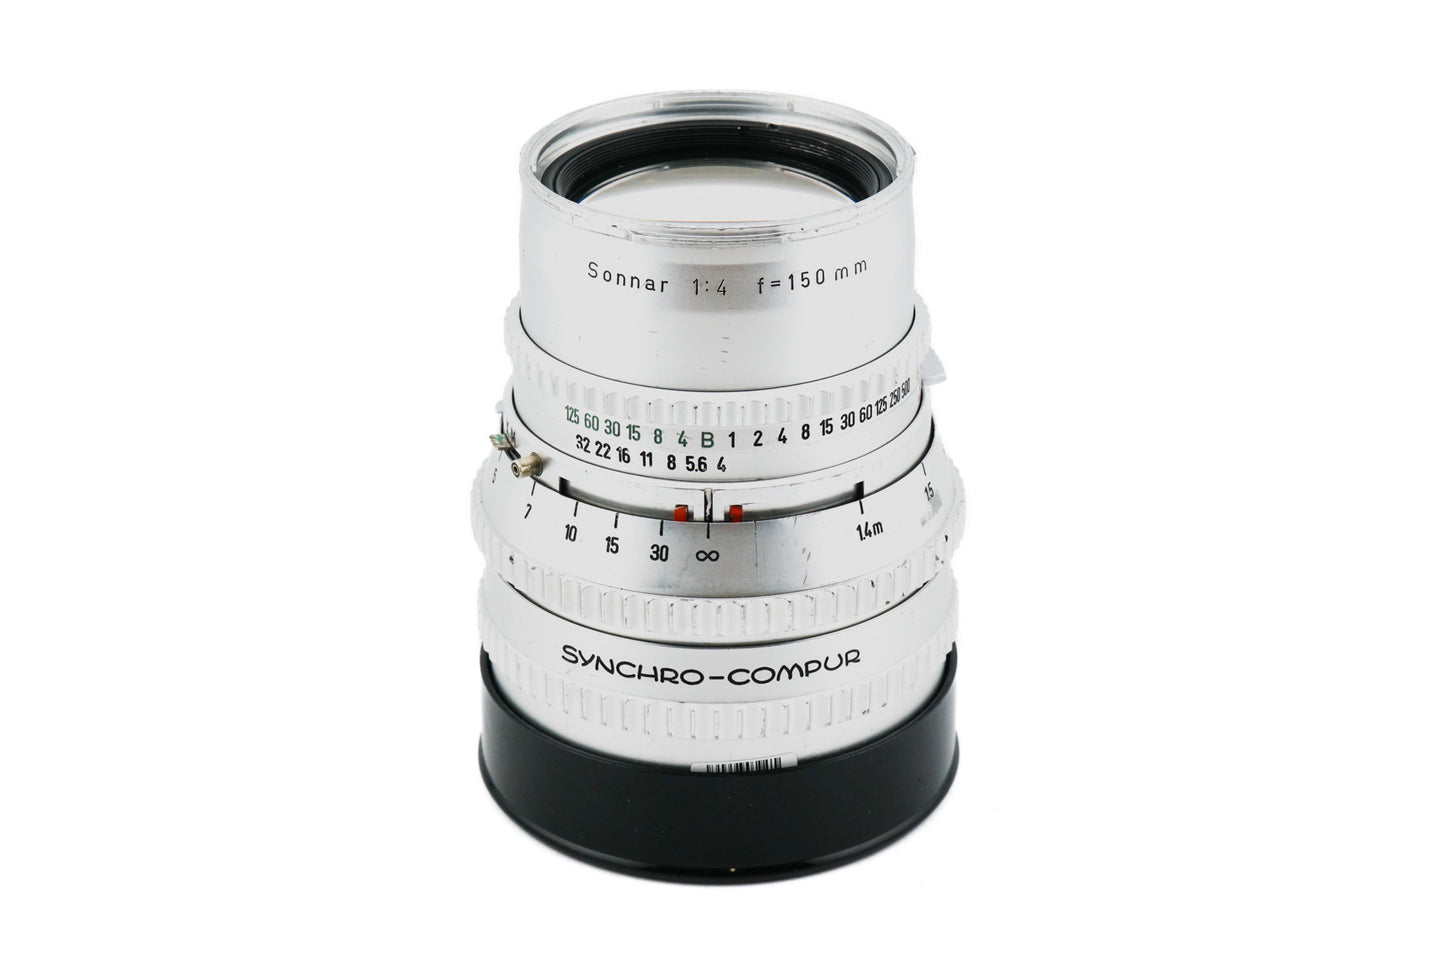 Hasselblad 150mm f4 Sonnar C - Lens